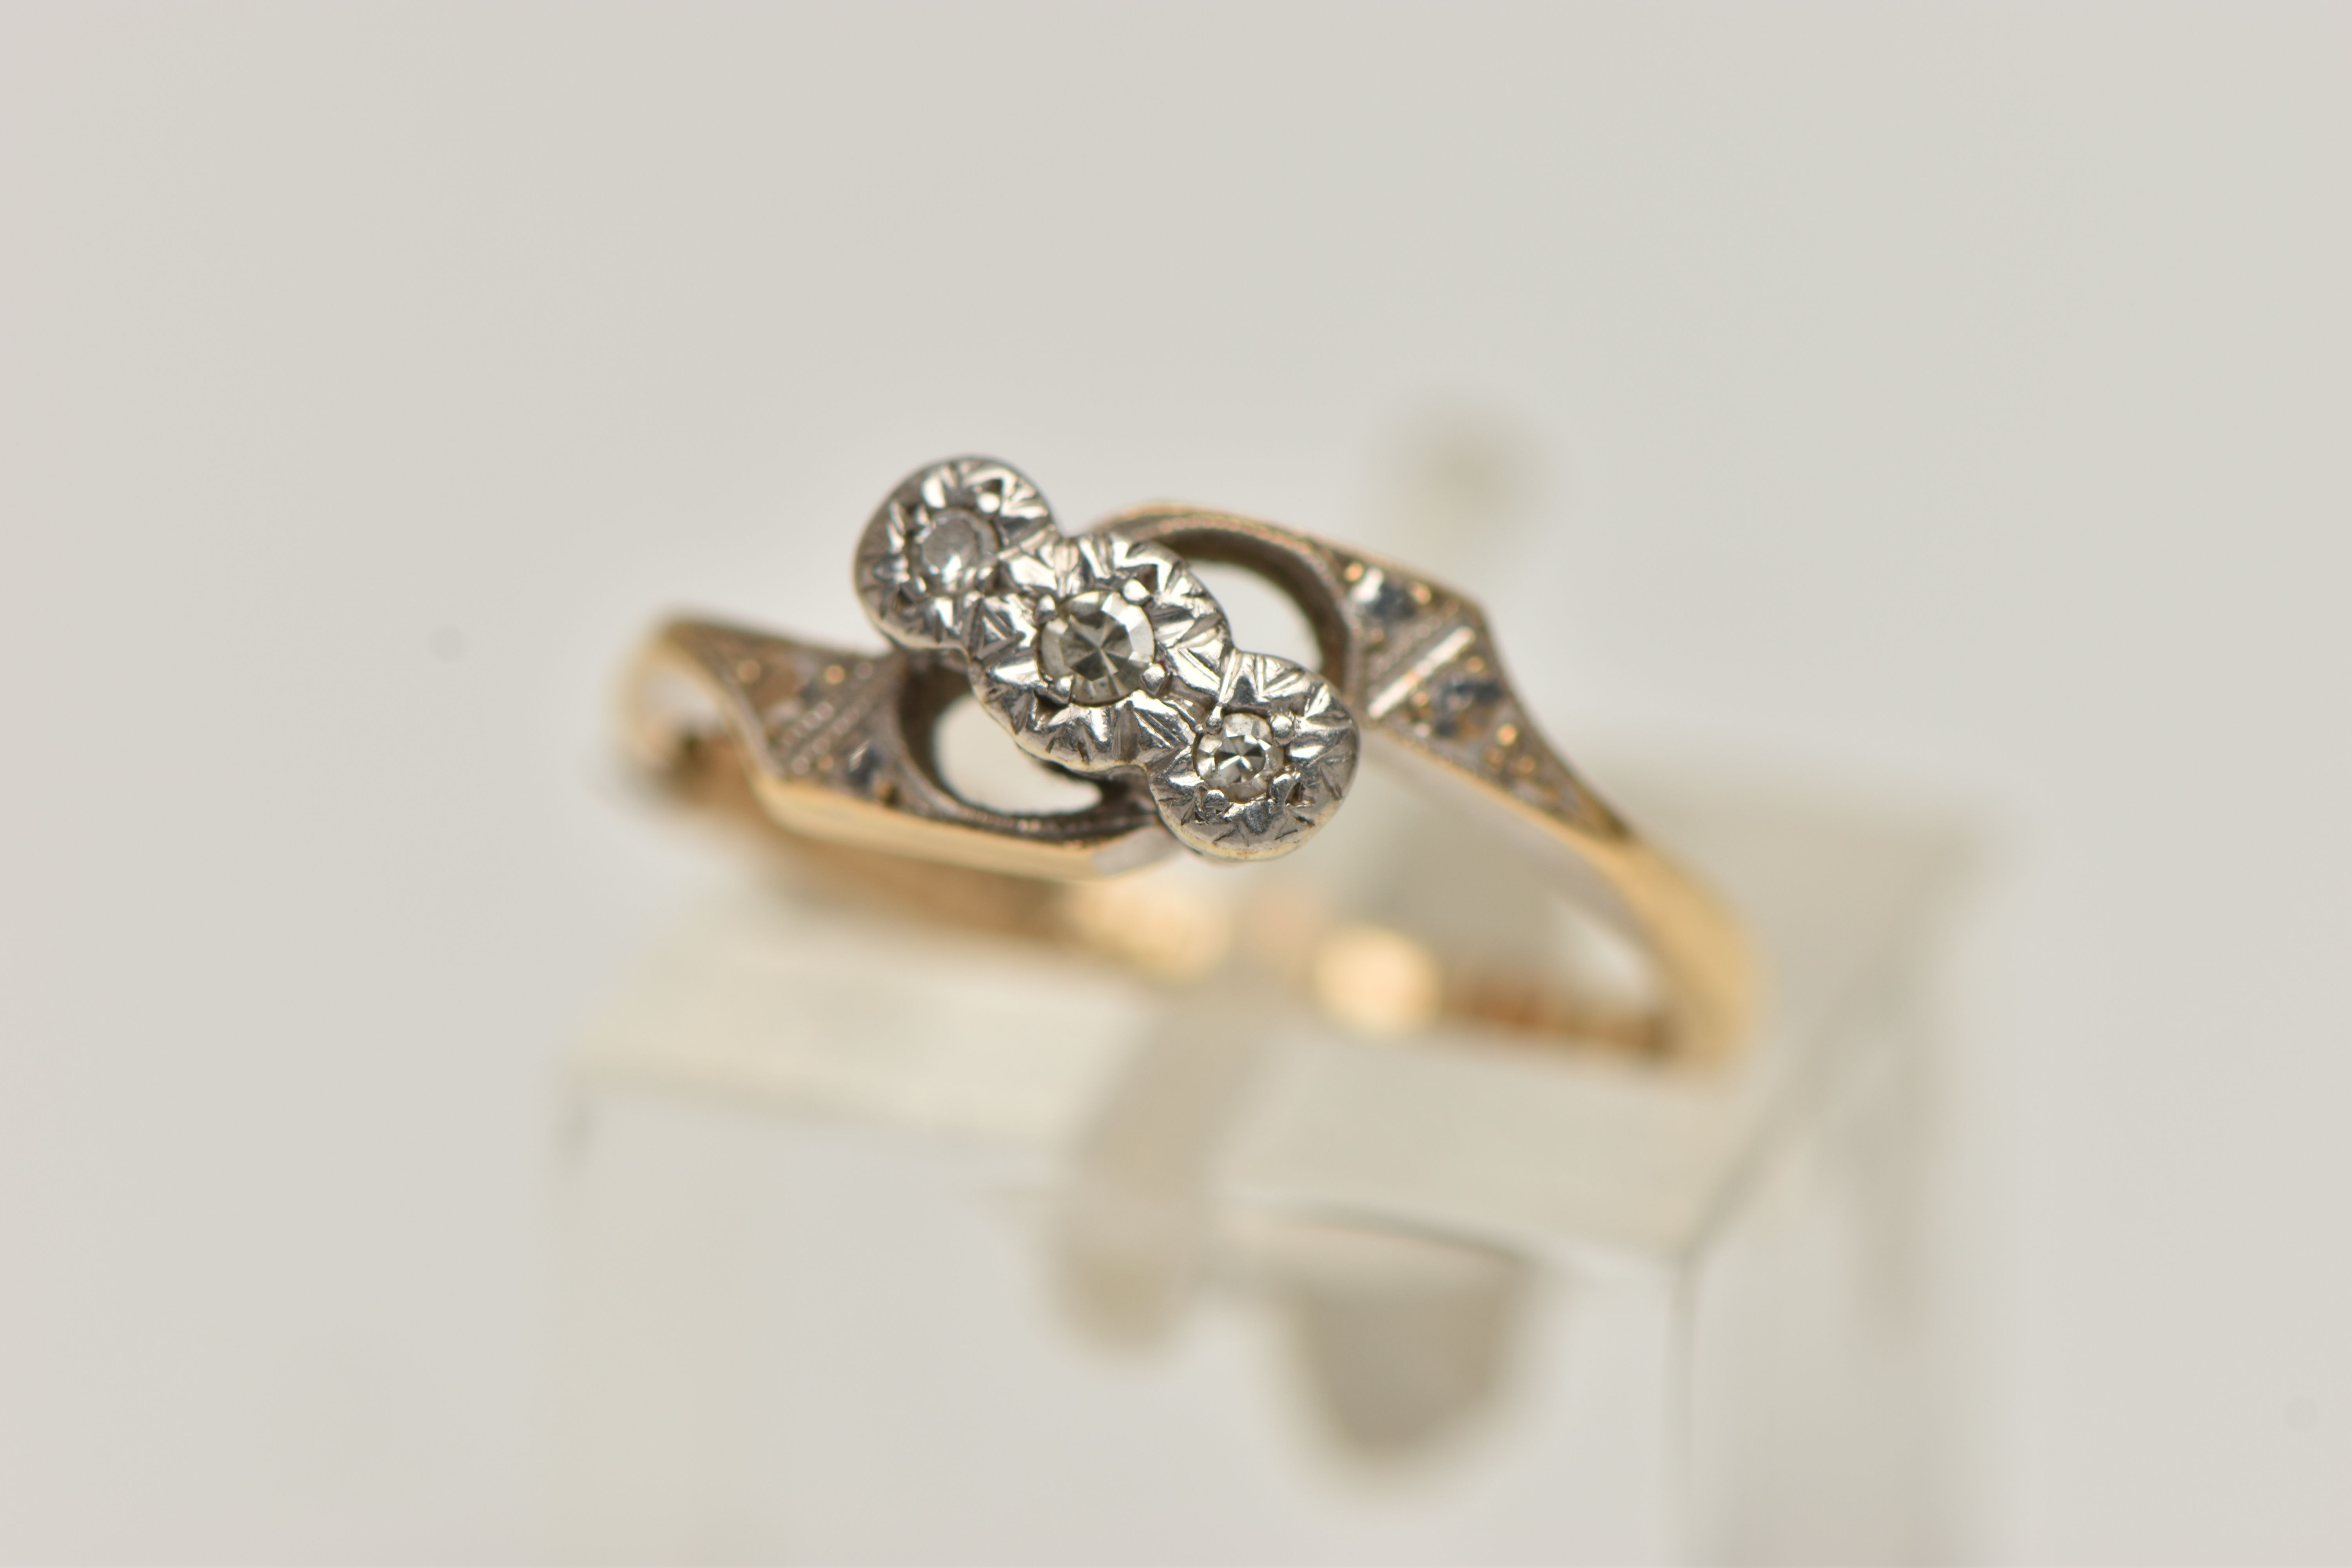 A THREE STONE DIAMOND RING, a yellow and white metal three stone diamond ring, three small single